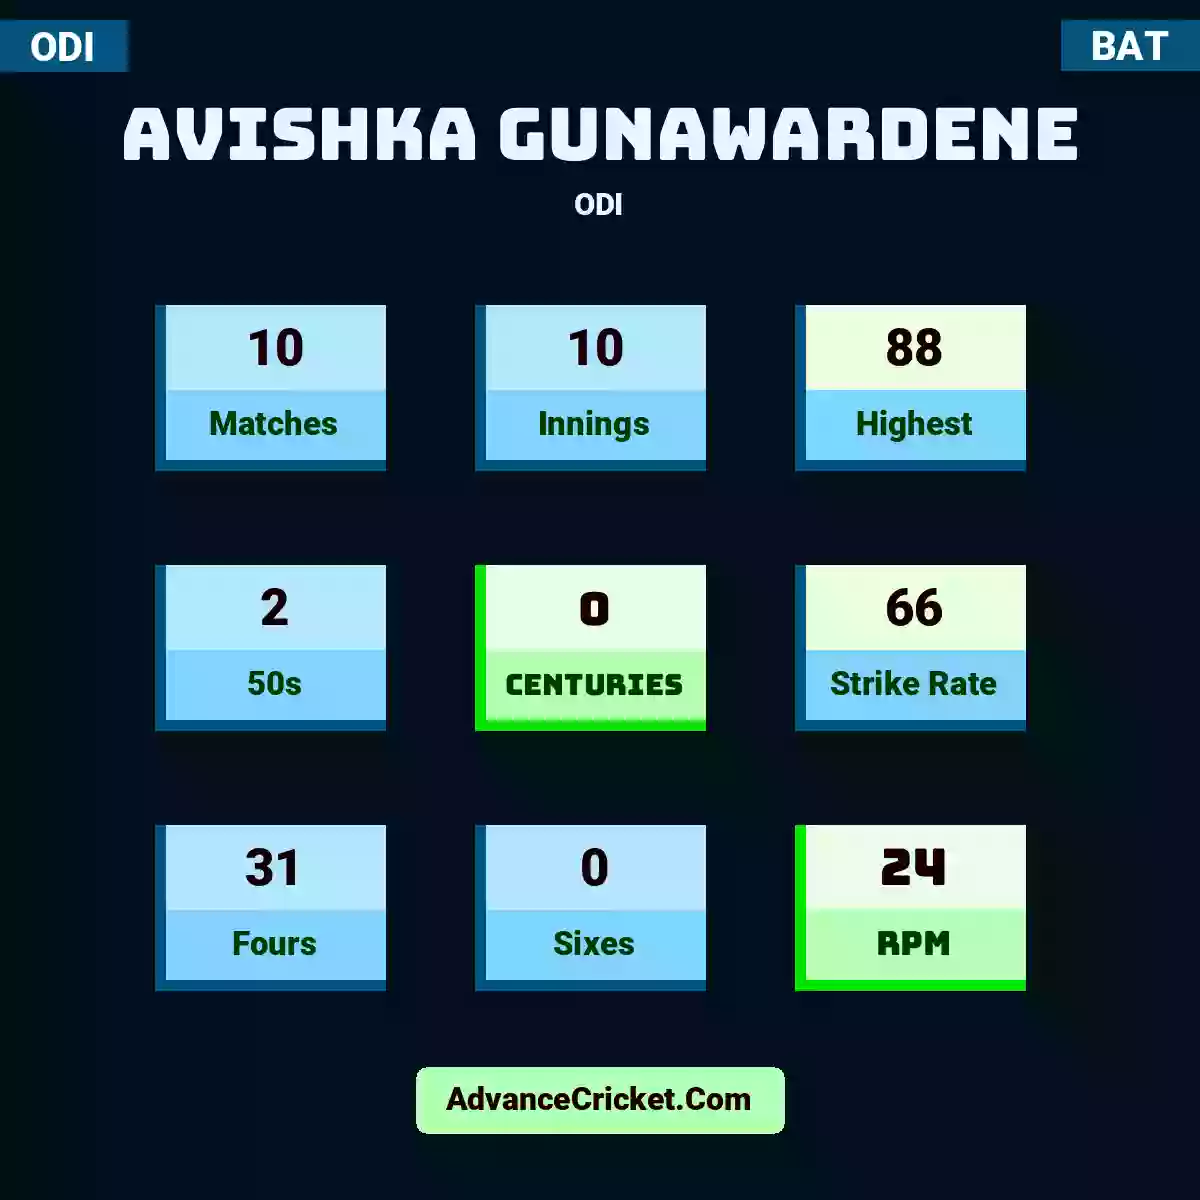 Avishka Gunawardene ODI , Avishka Gunawardene played 10 matches, scored 88 runs as highest, 2 half-centuries, and 0 centuries, with a strike rate of 66. A.Gunawardene hit 31 fours and 0 sixes, with an RPM of 24.